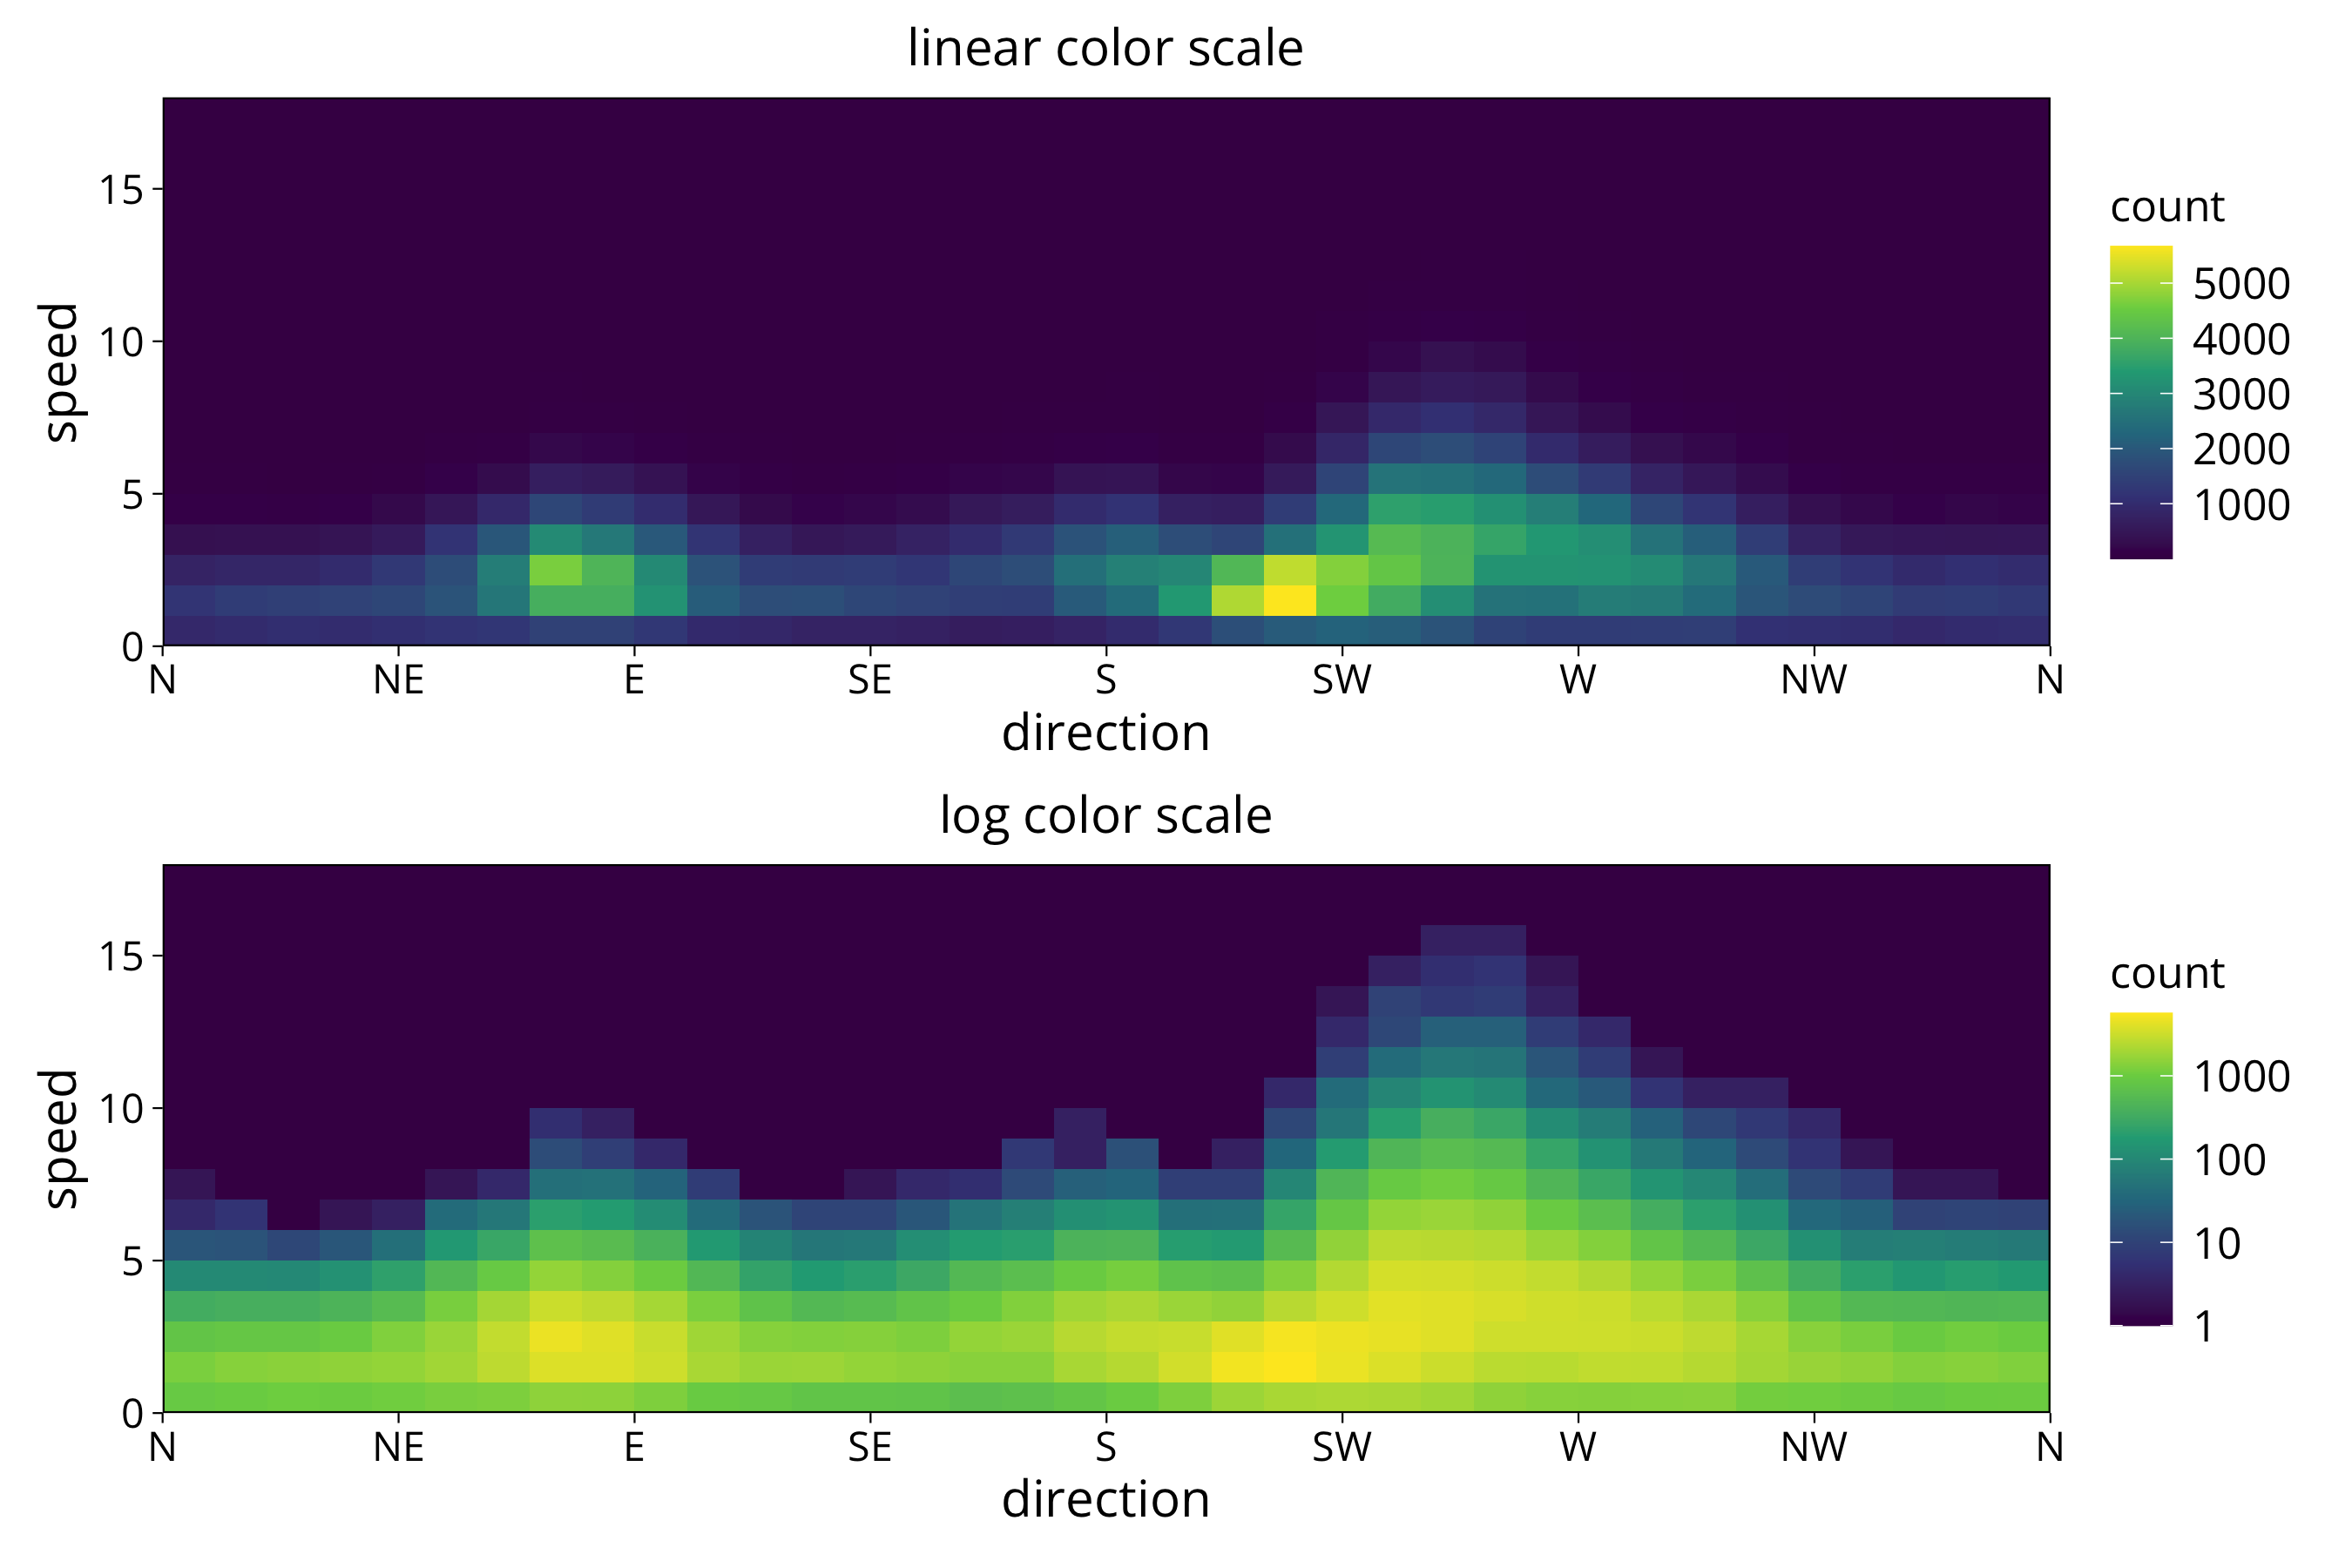 plot of chunk heatmap raster with measurment resolution